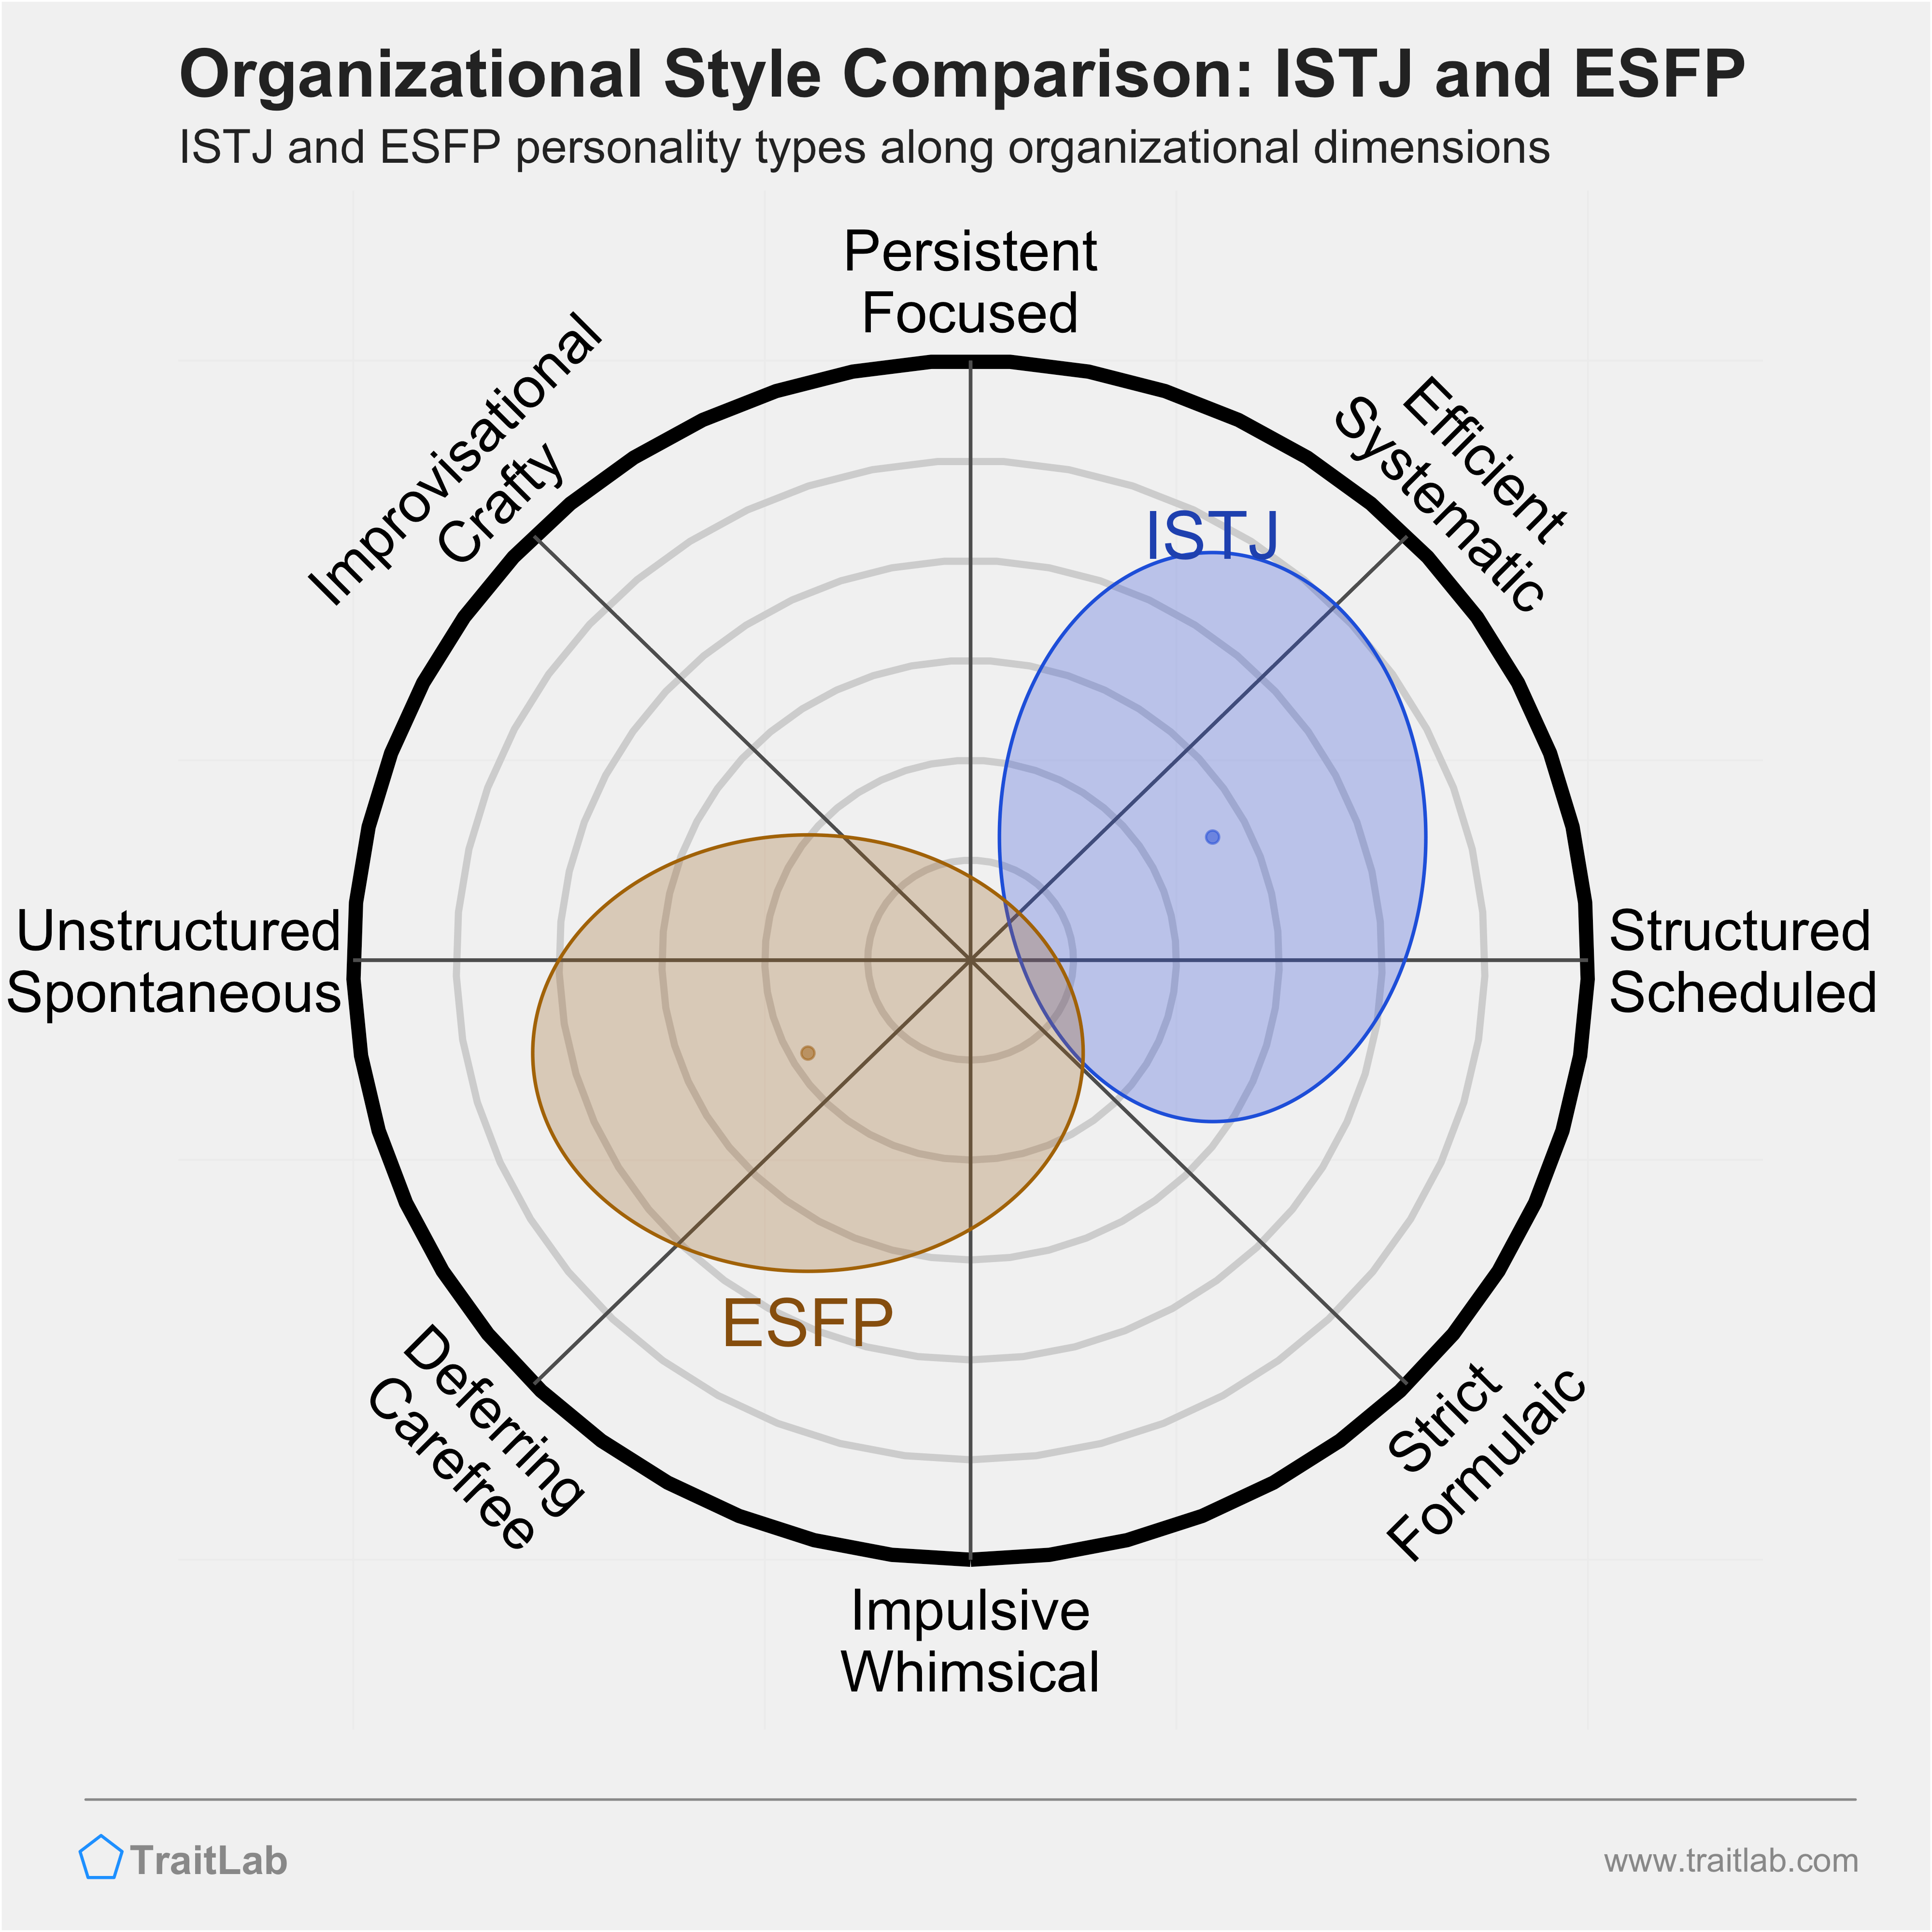 ISTJ and ESFP comparison across organizational dimensions